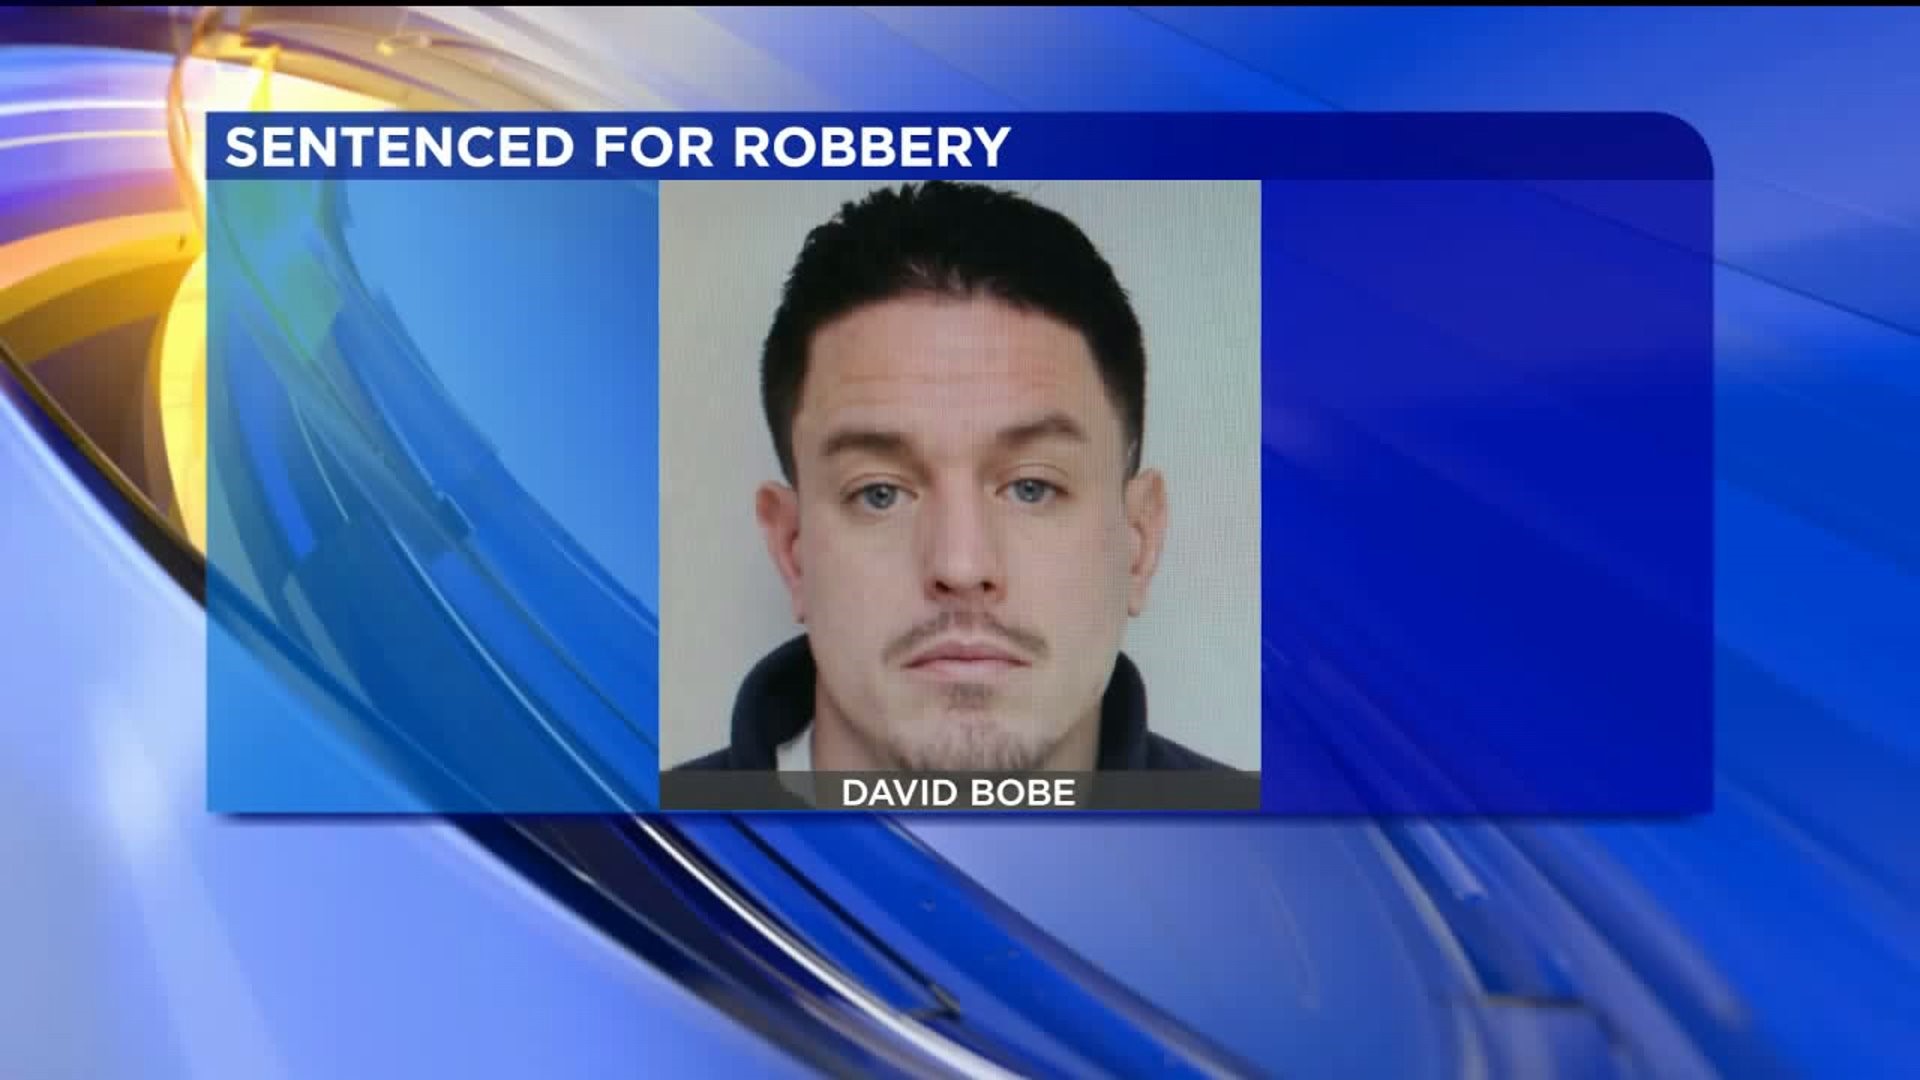 Man Sentenced for Coin Shop Robbery